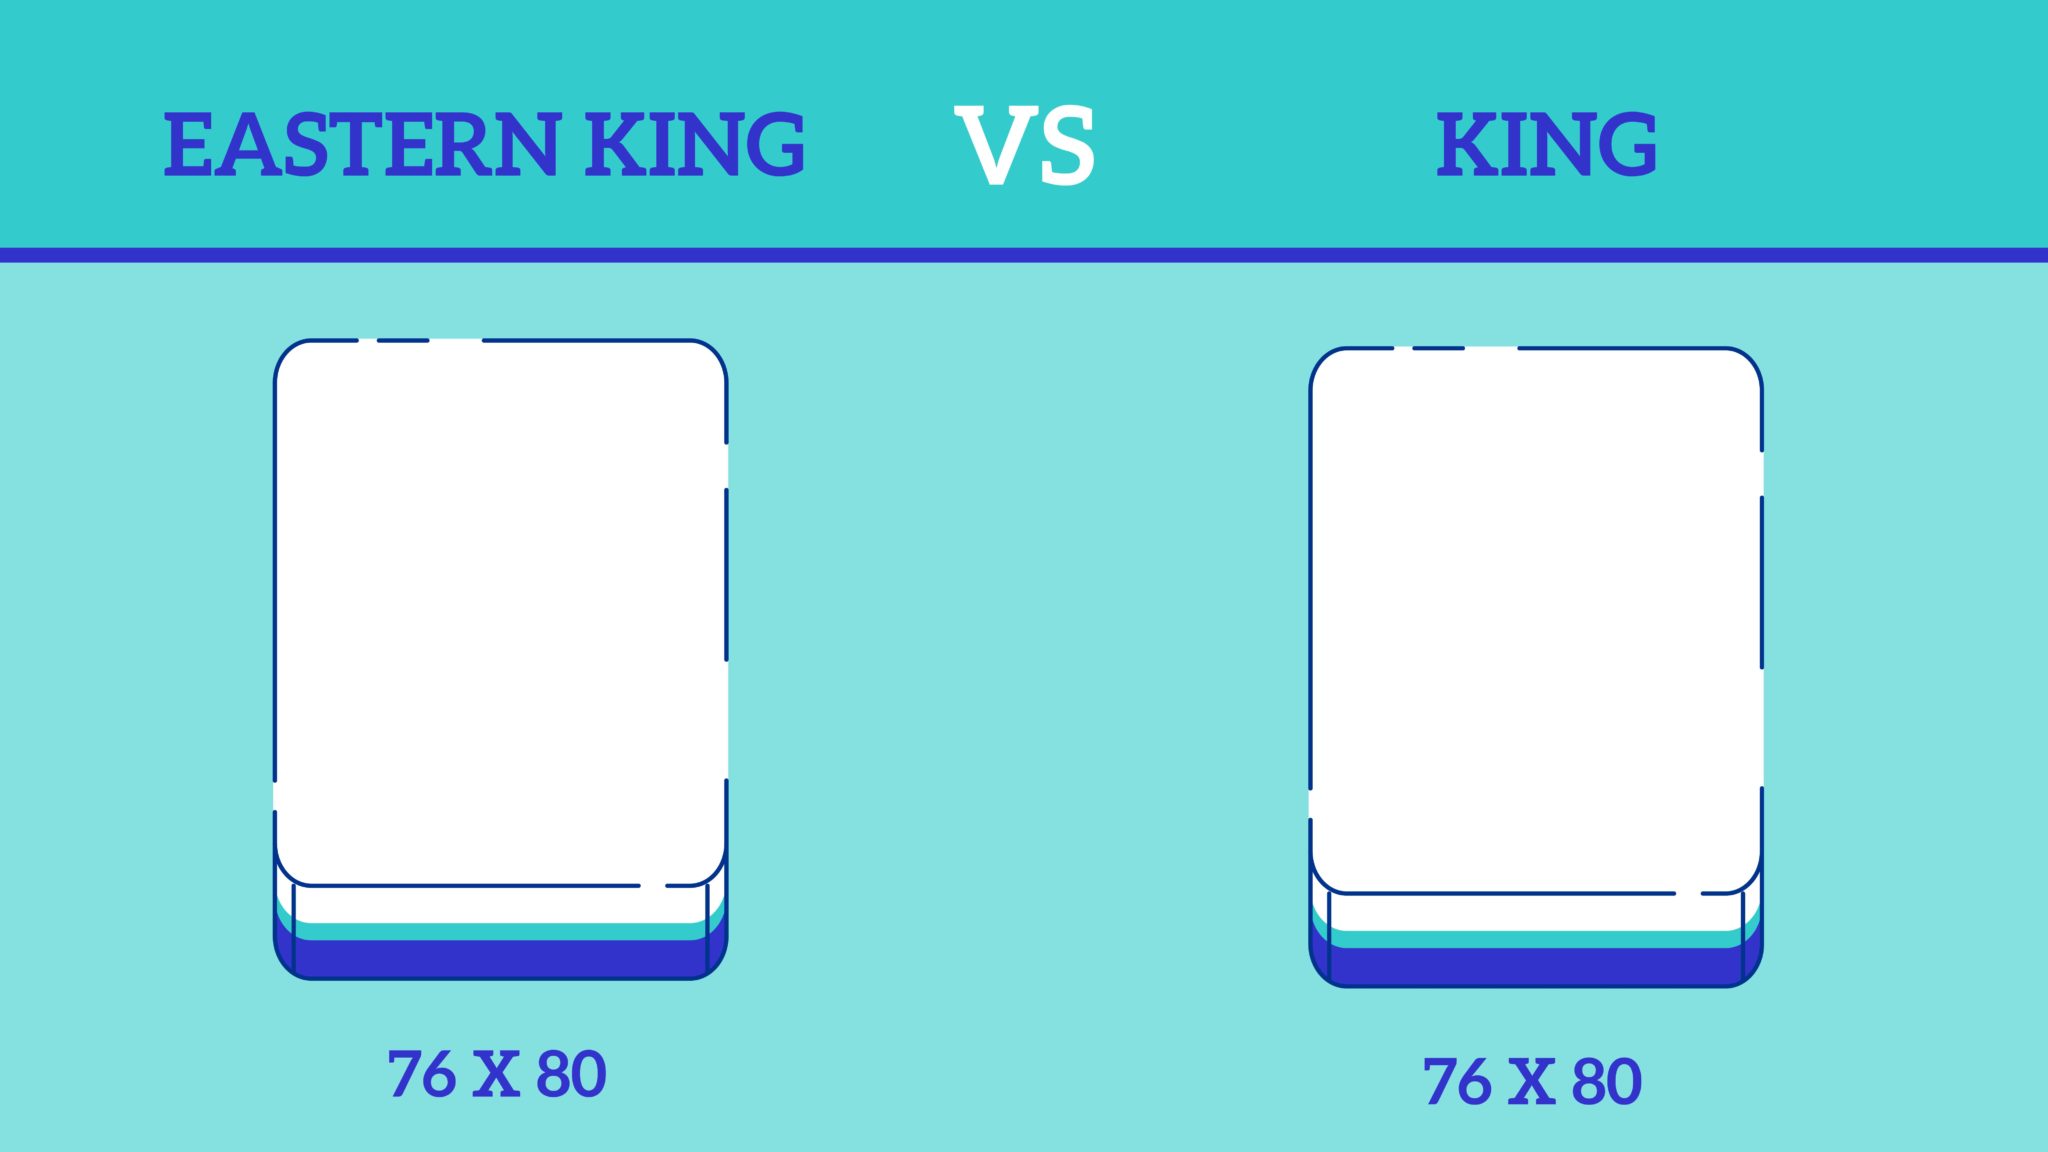 r2 plush eastern king mattress reviews